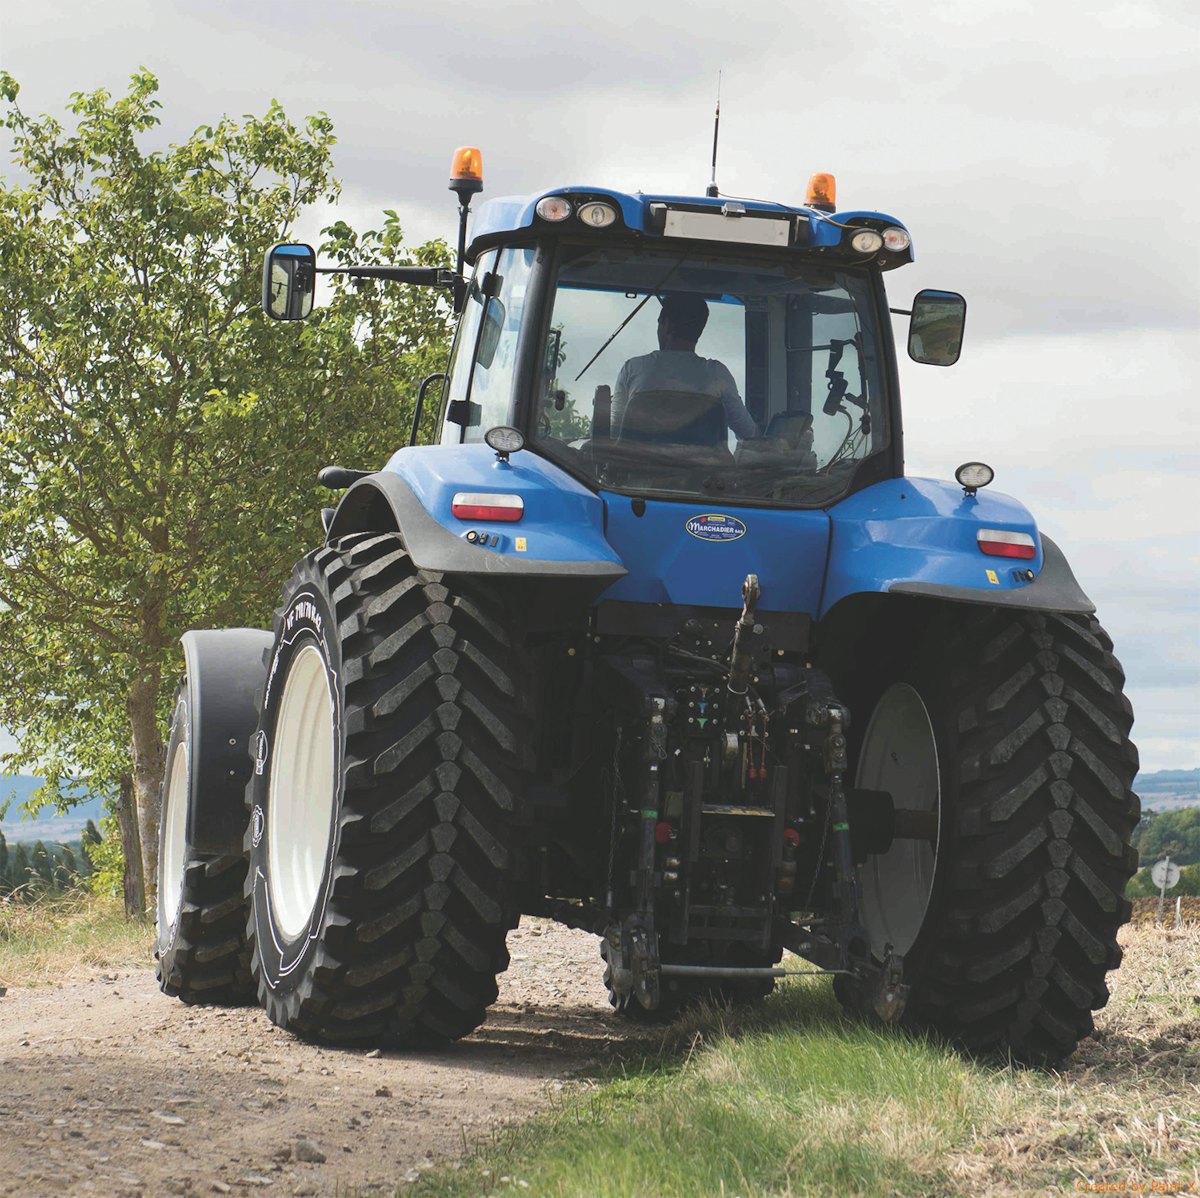 Michelin Exhibits Future of Agricultural Tires at Farm Progress